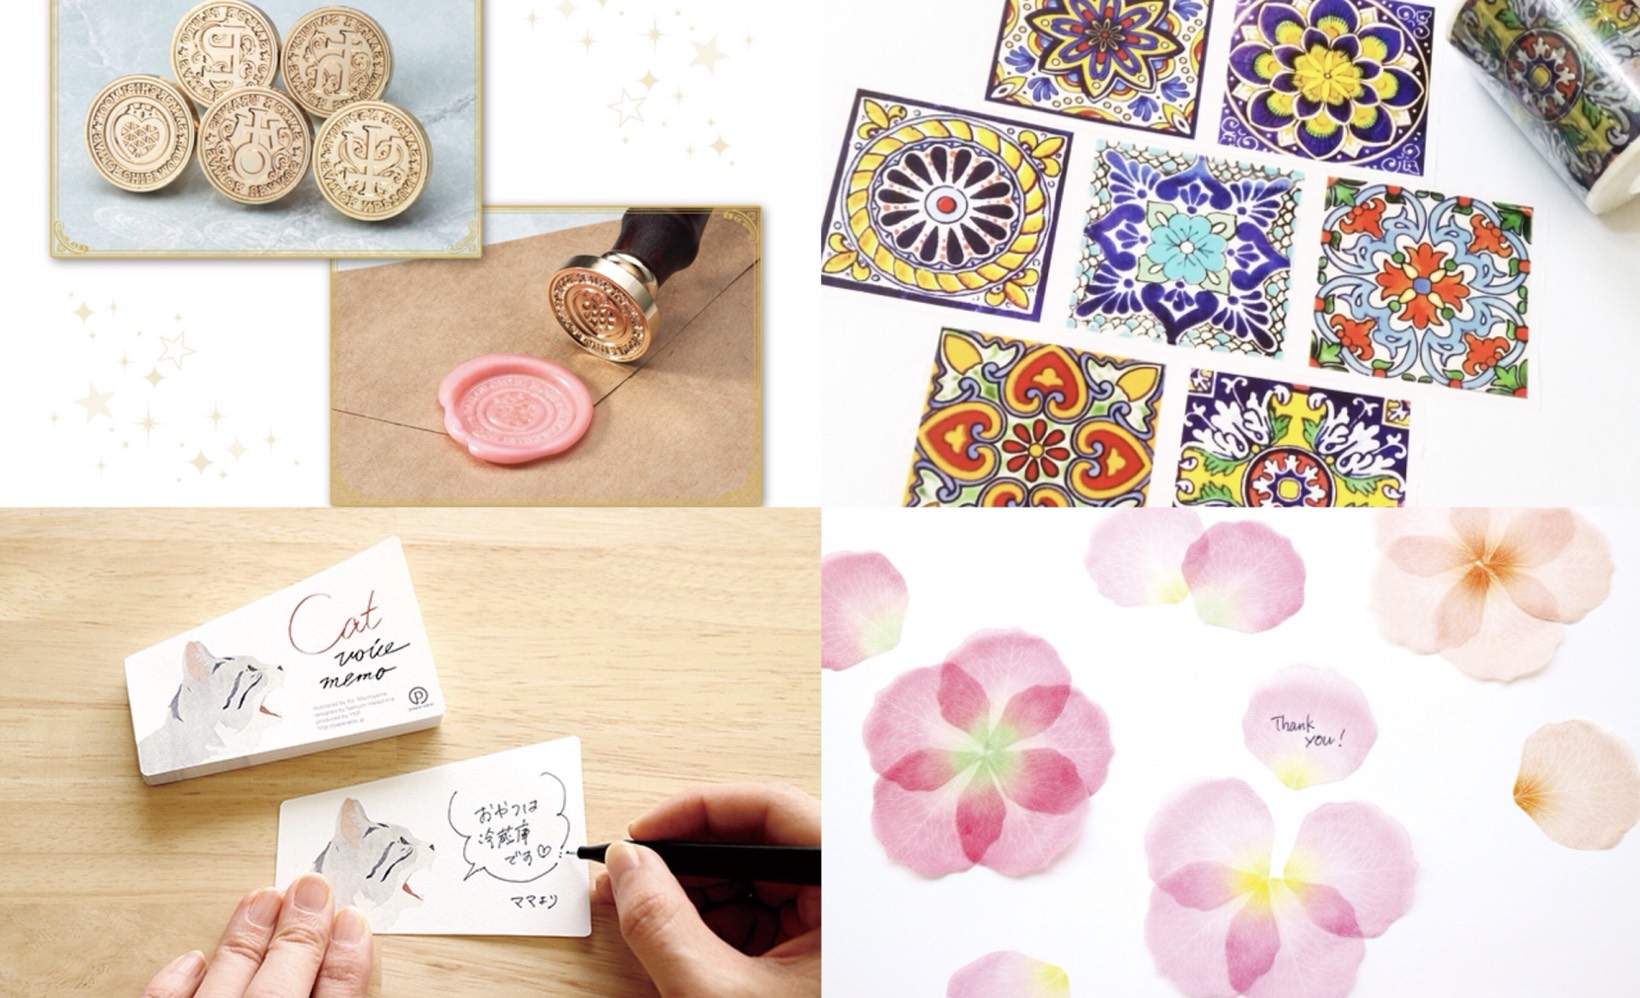 Craft Your Own - Cherry Blossom Pochette Kit - Animal Crossing Inspired